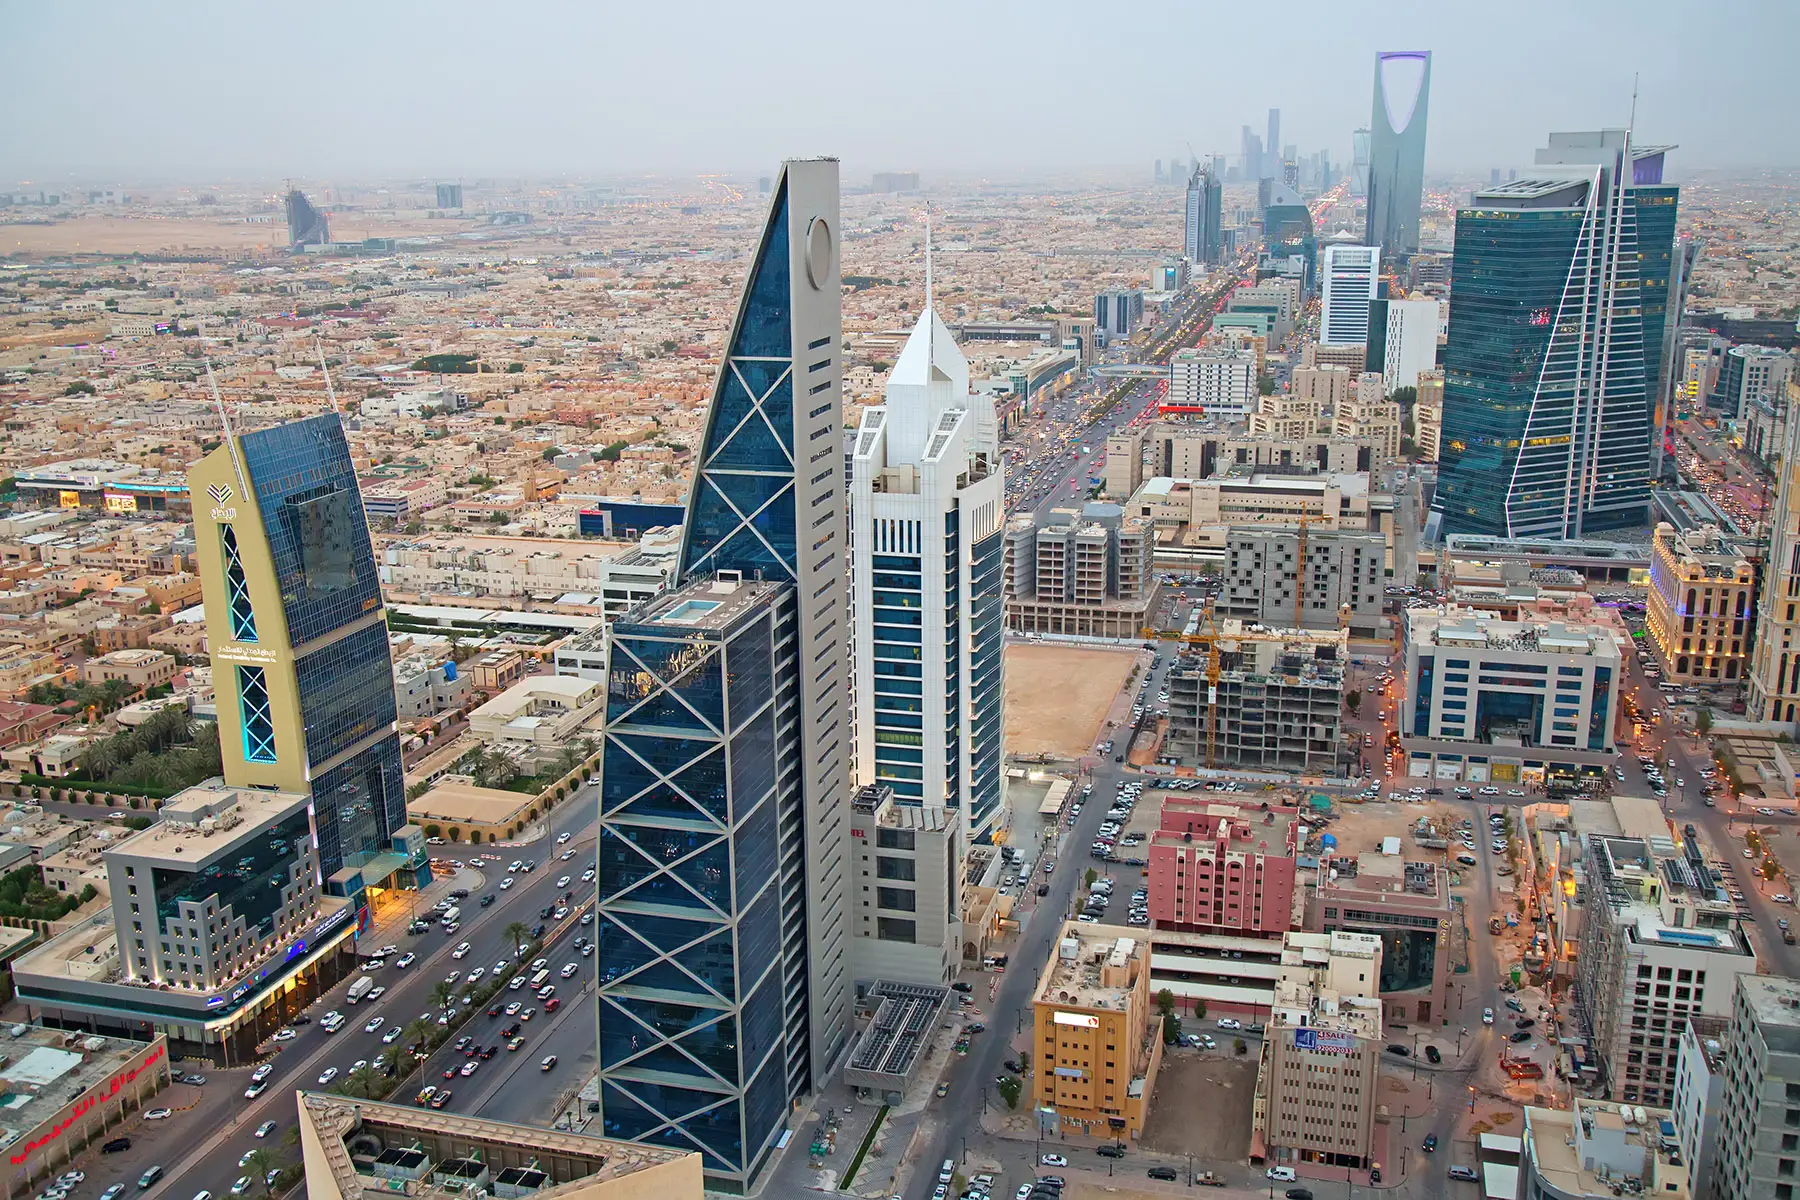 The modern skyline of Riyadh